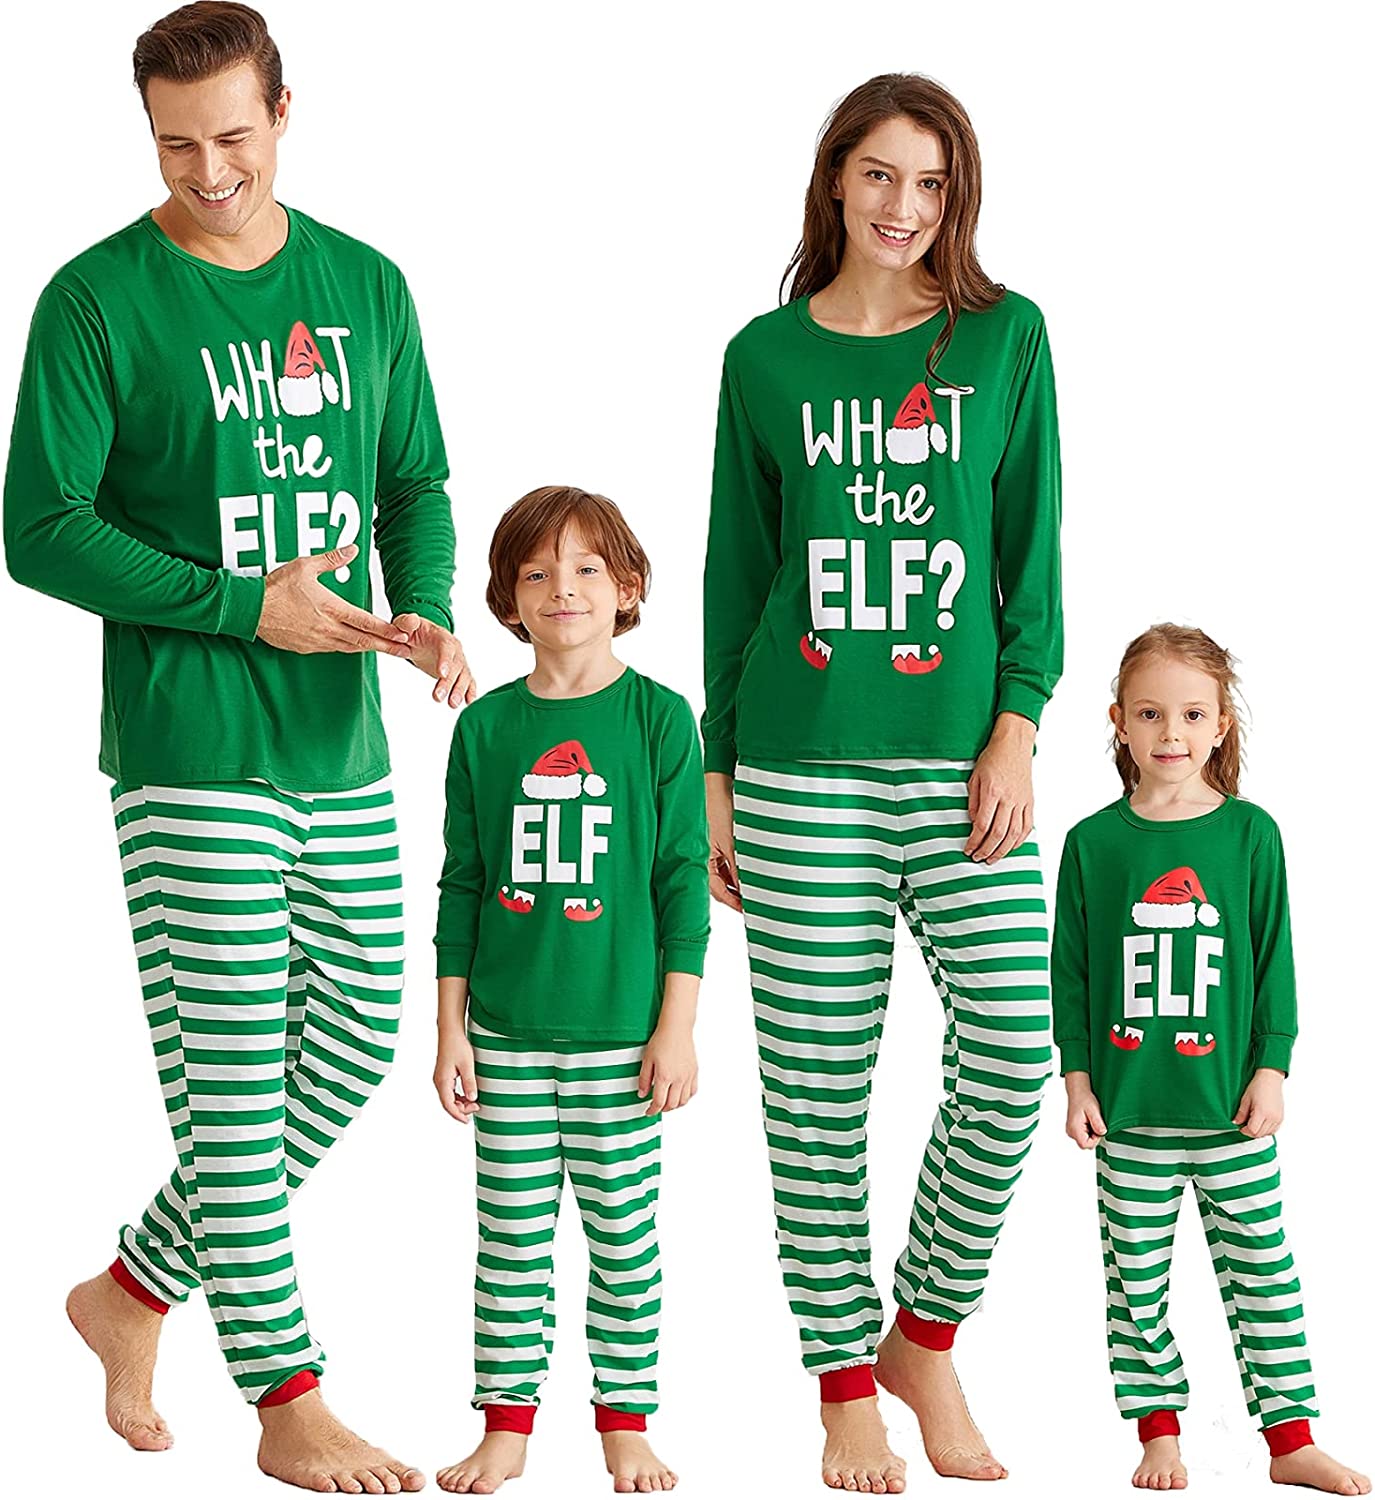 IFFEI Matching Family Christmas Pajamas Sets ELF Tee and Striped Bottom PJ's 